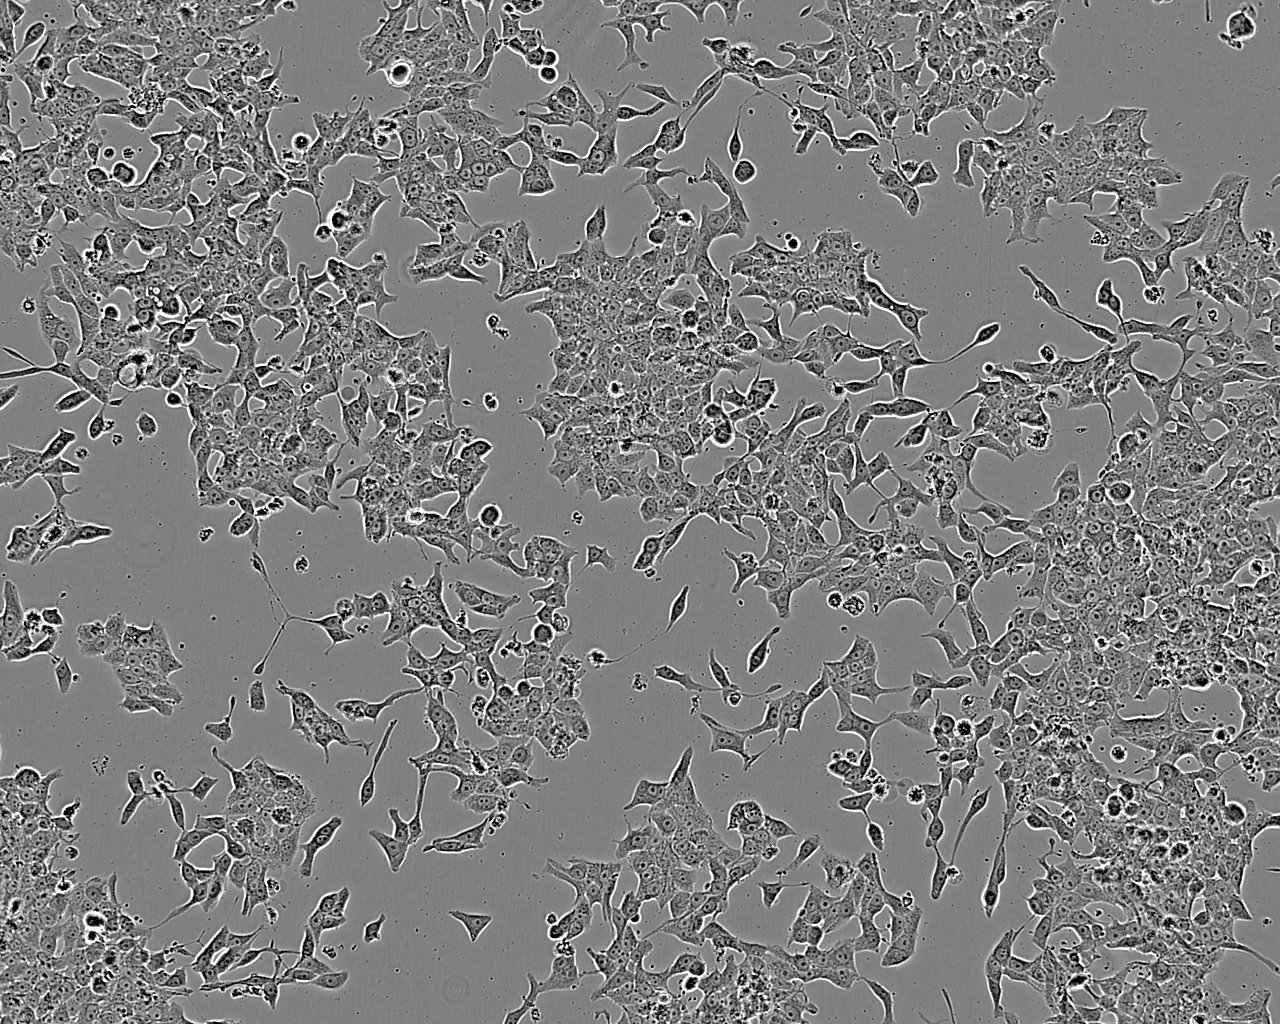 SKO-007 Cell:人多发性骨髓瘤细胞系